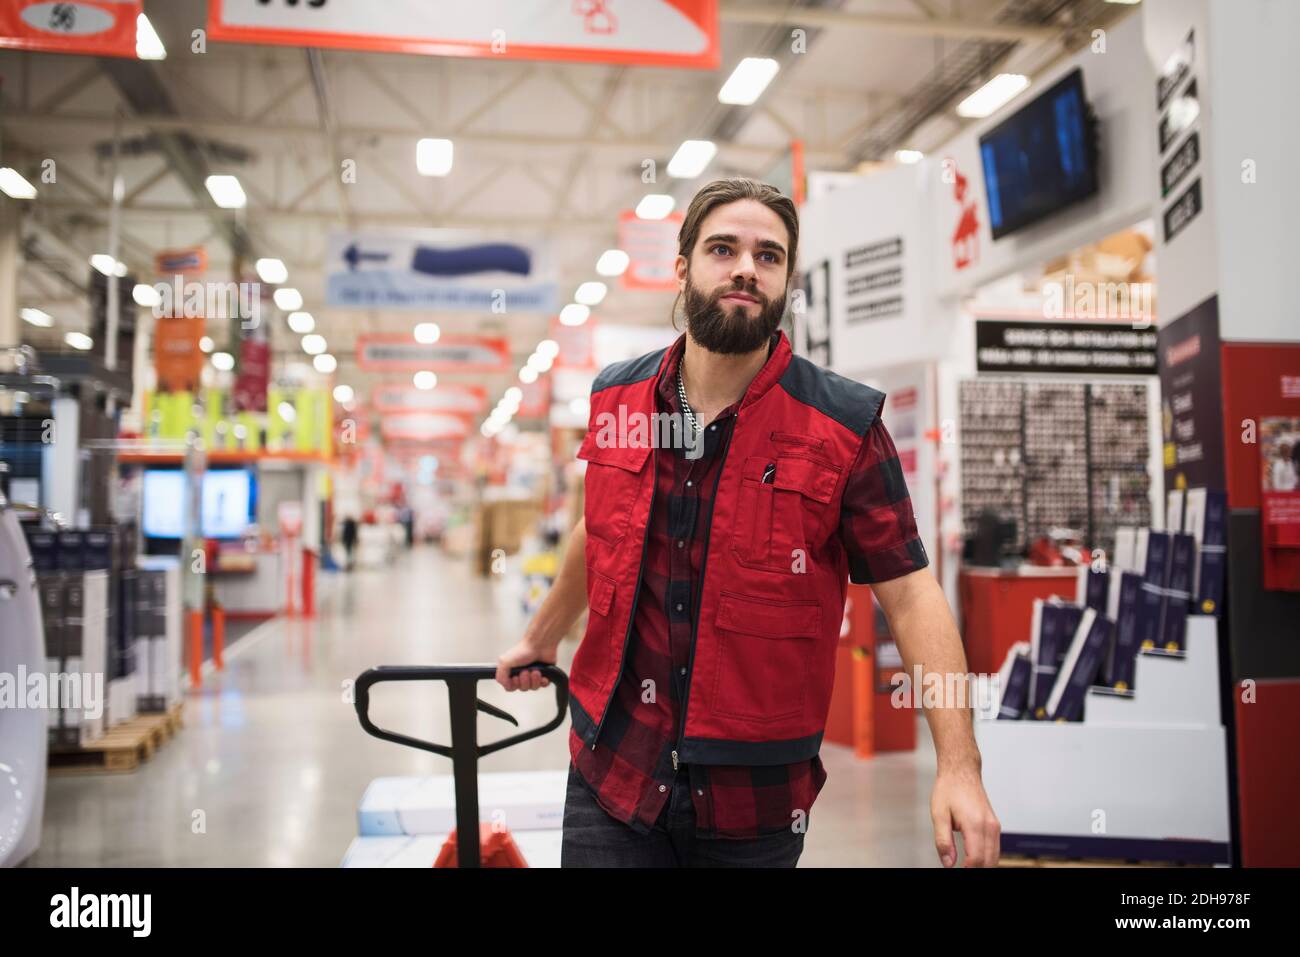 Salesman pulling handtruck in hardware store Stock Photo